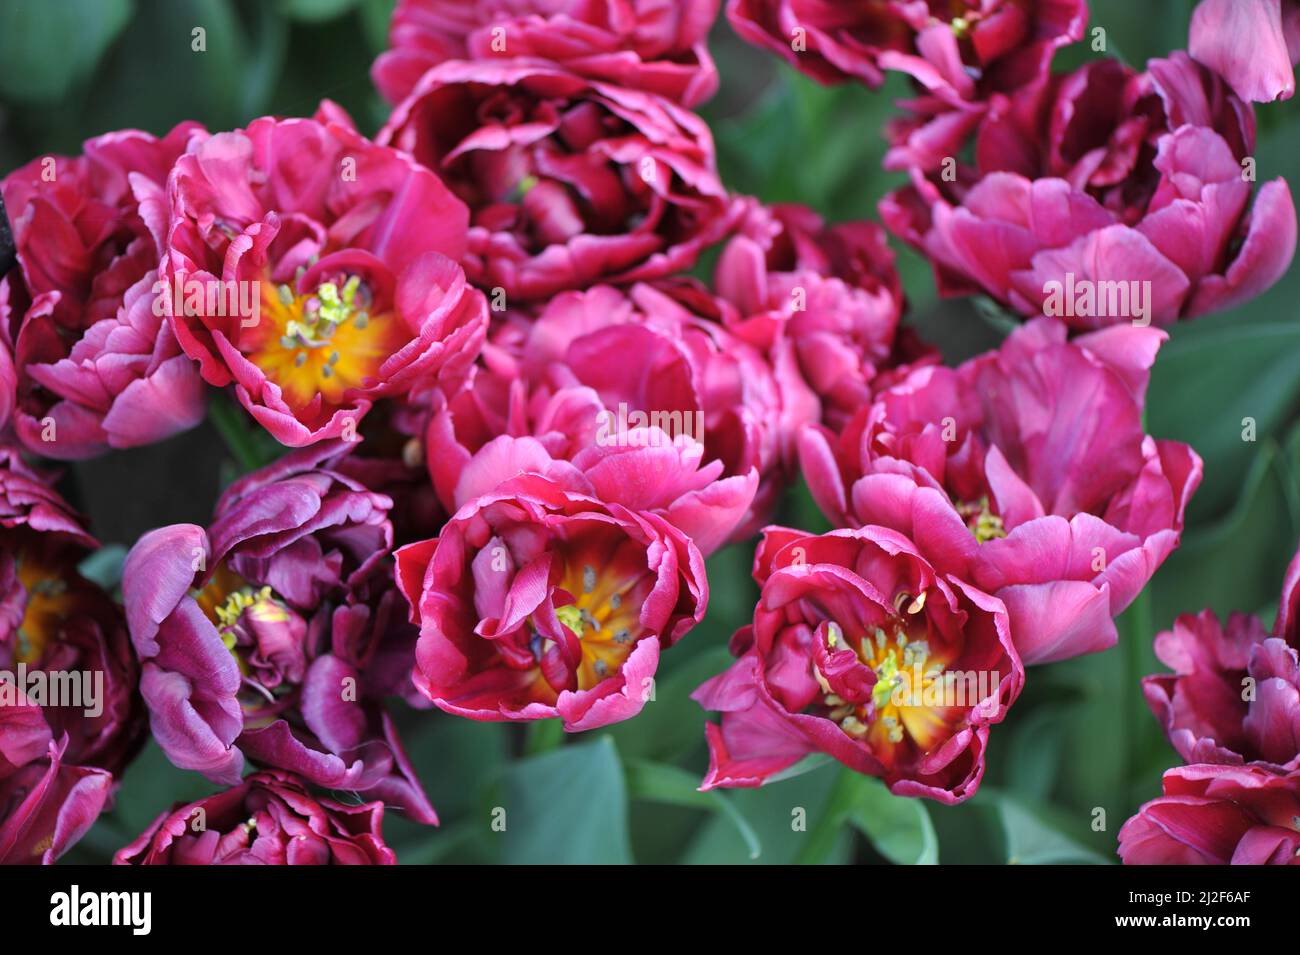 Rosafarbene, Pfingstrosen-blühende, doppelte frühe Tulpen (Tulipa) Alison Bradley blüht im März in einem Garten Stockfoto